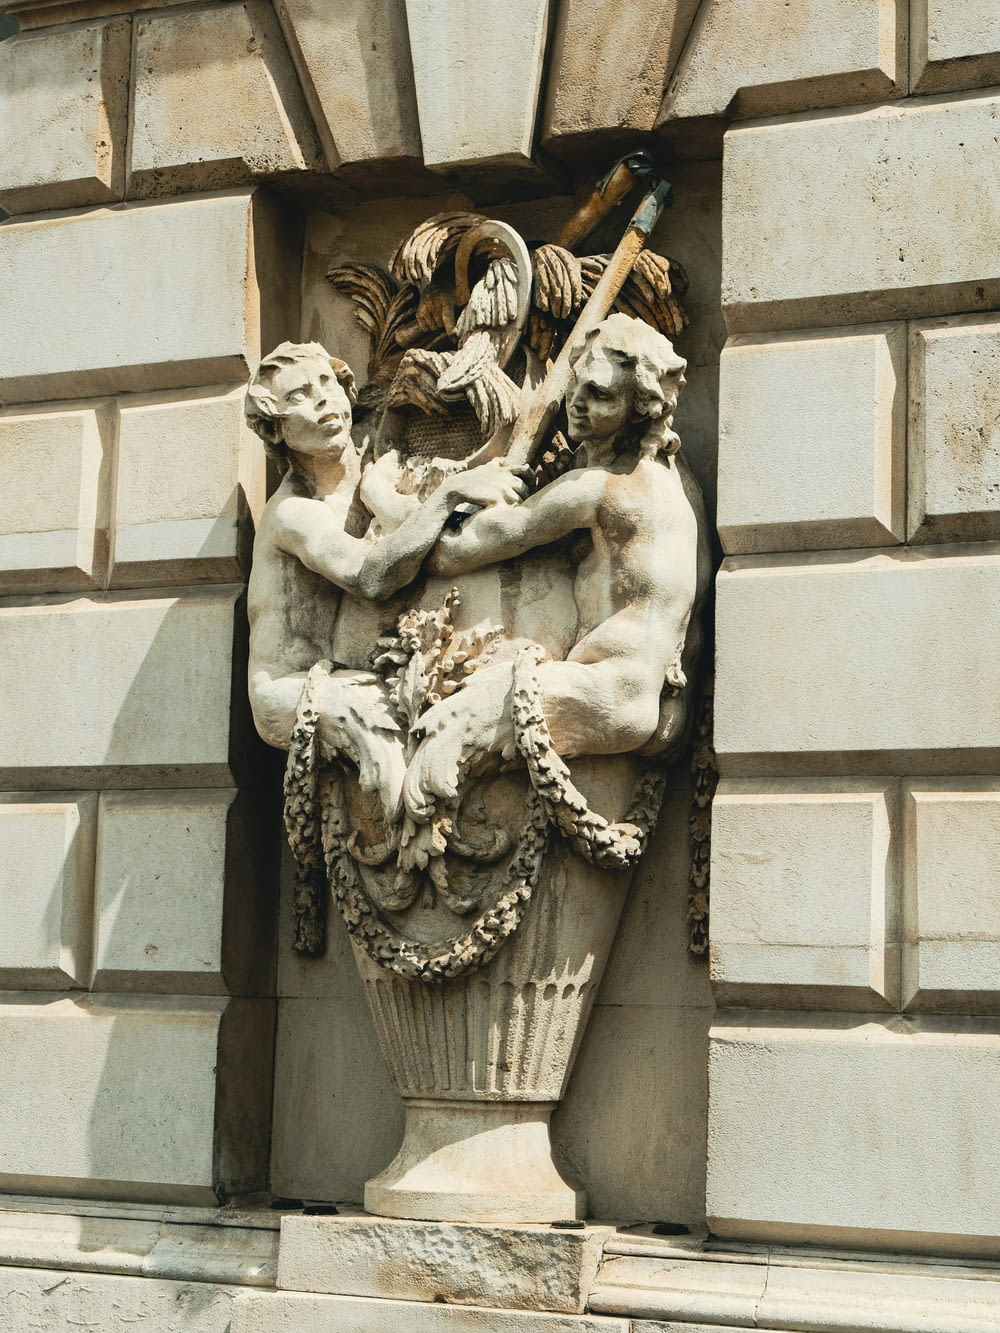 a statue of two men holding a baseball bat